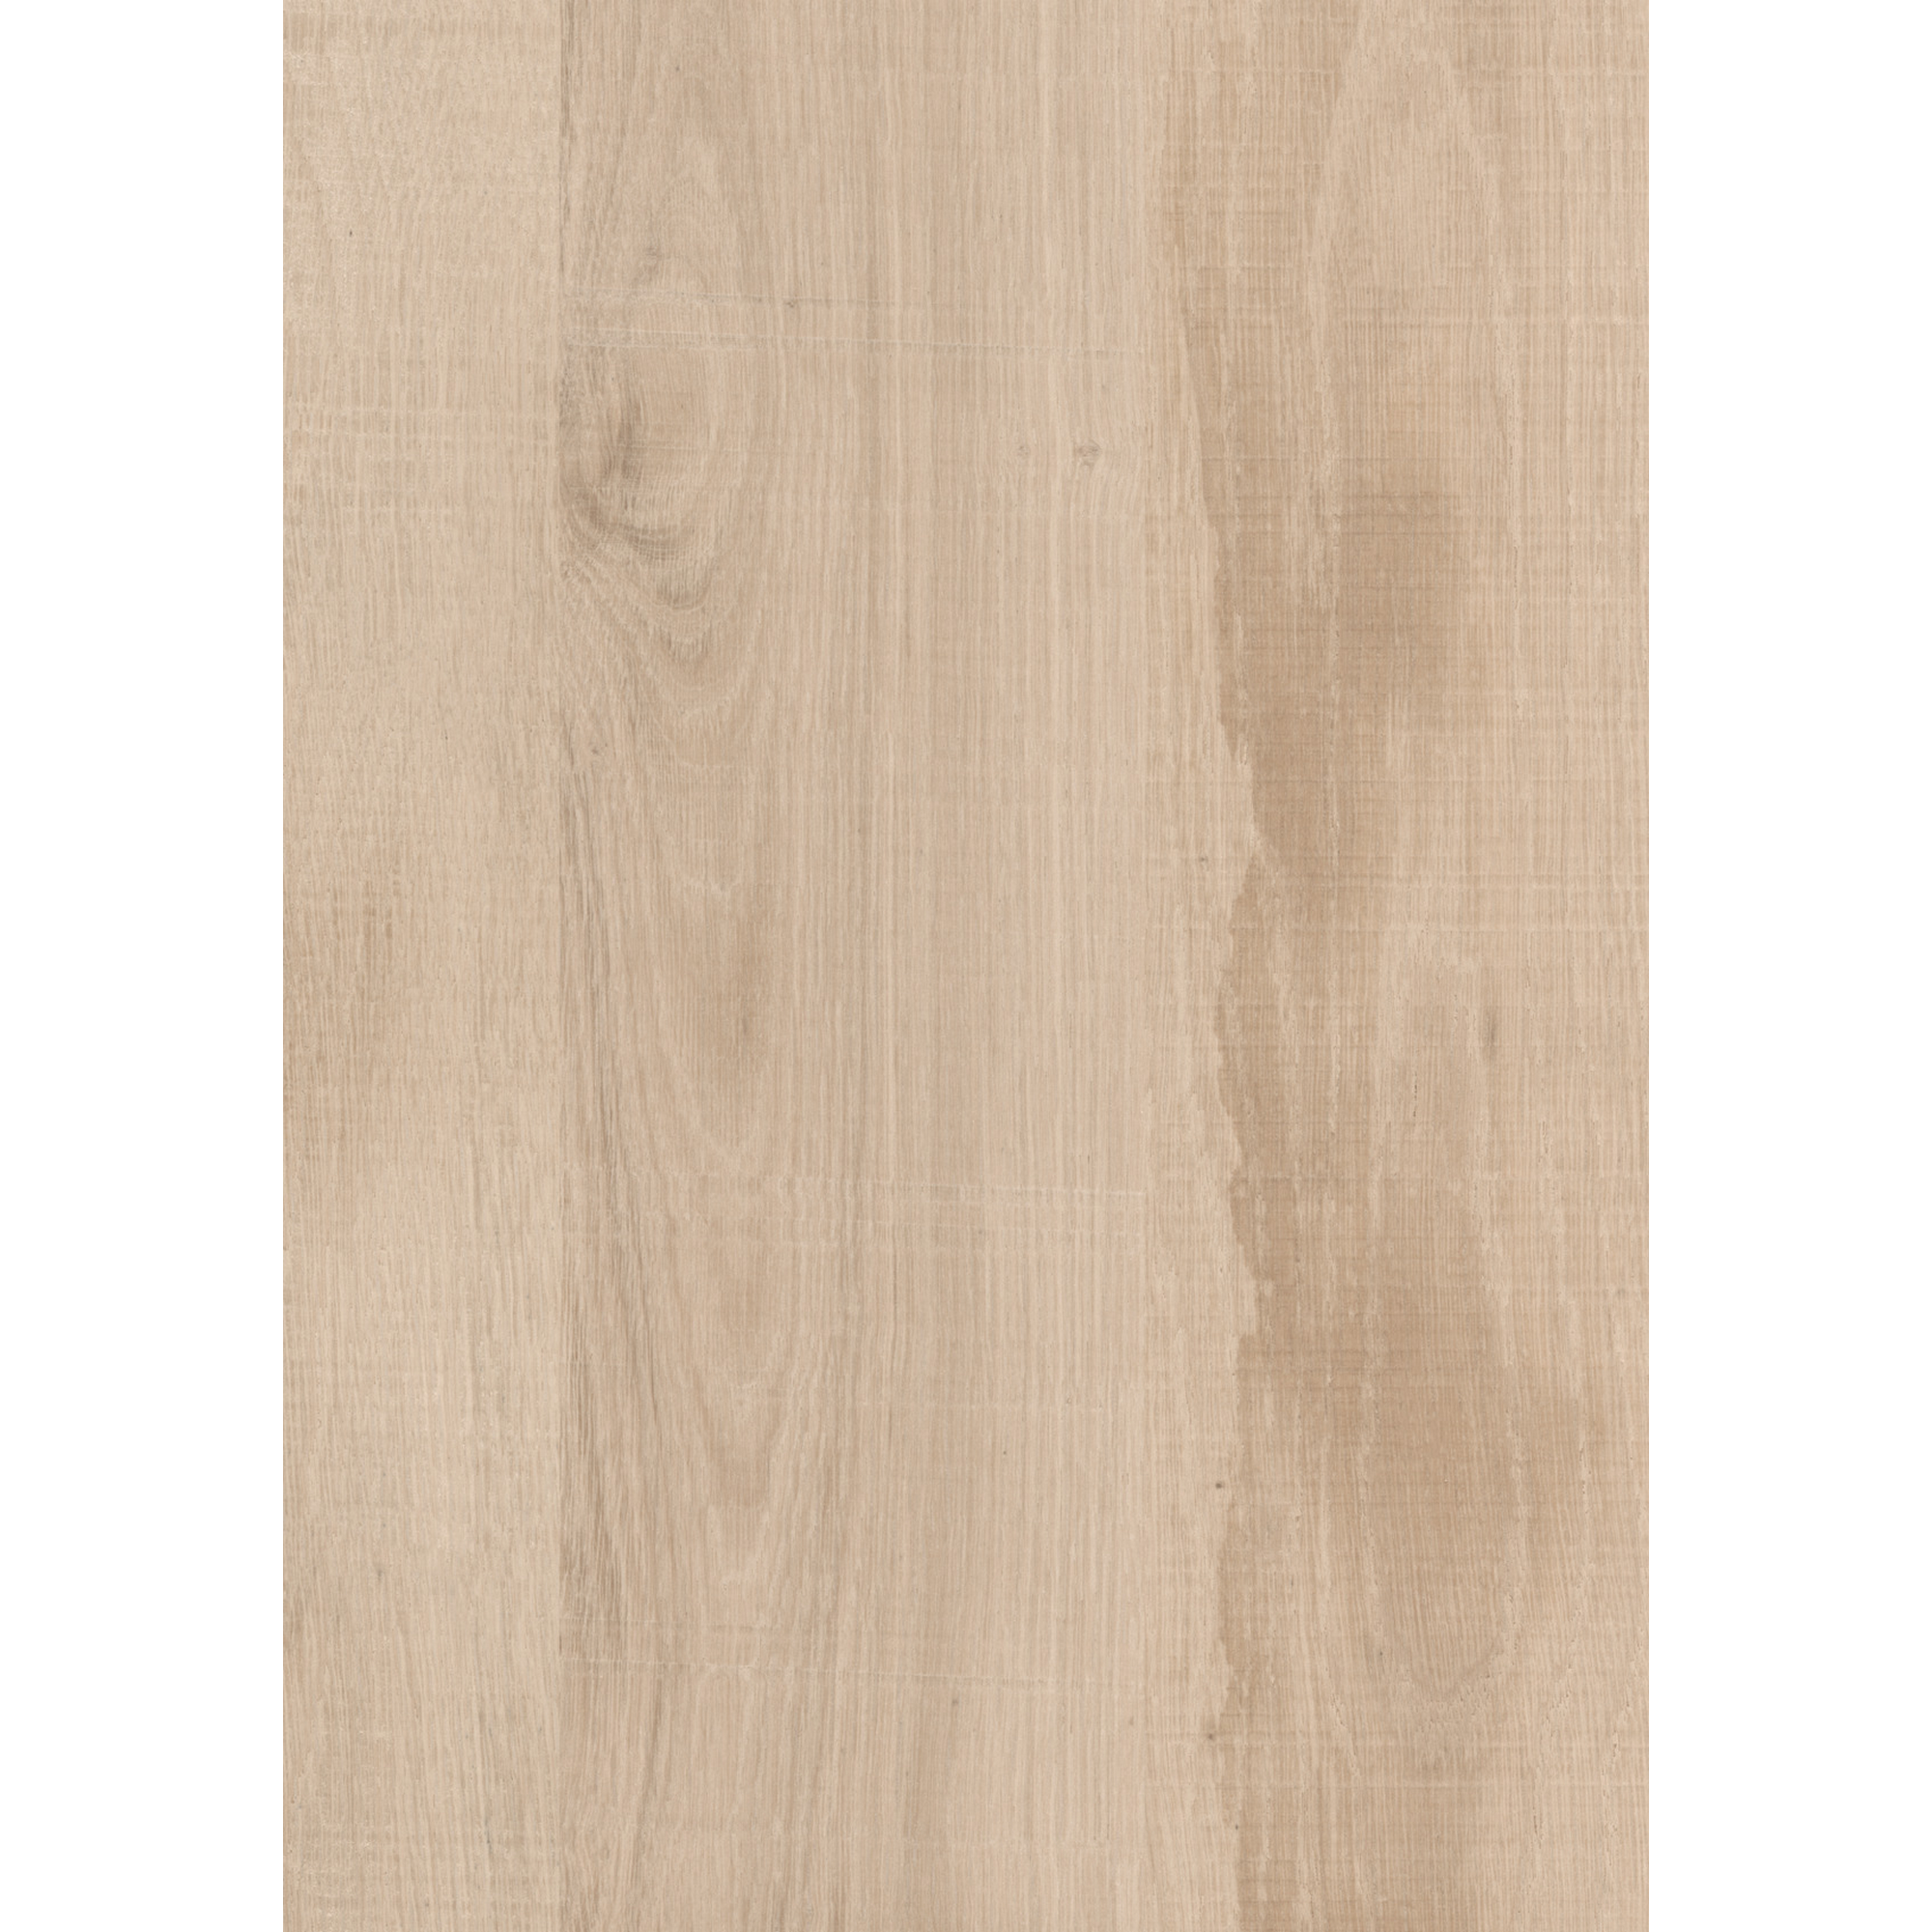 Arbeitsplatte 'K4410' Native Oak Light beige 4100 x 900 x 38 mm + product picture